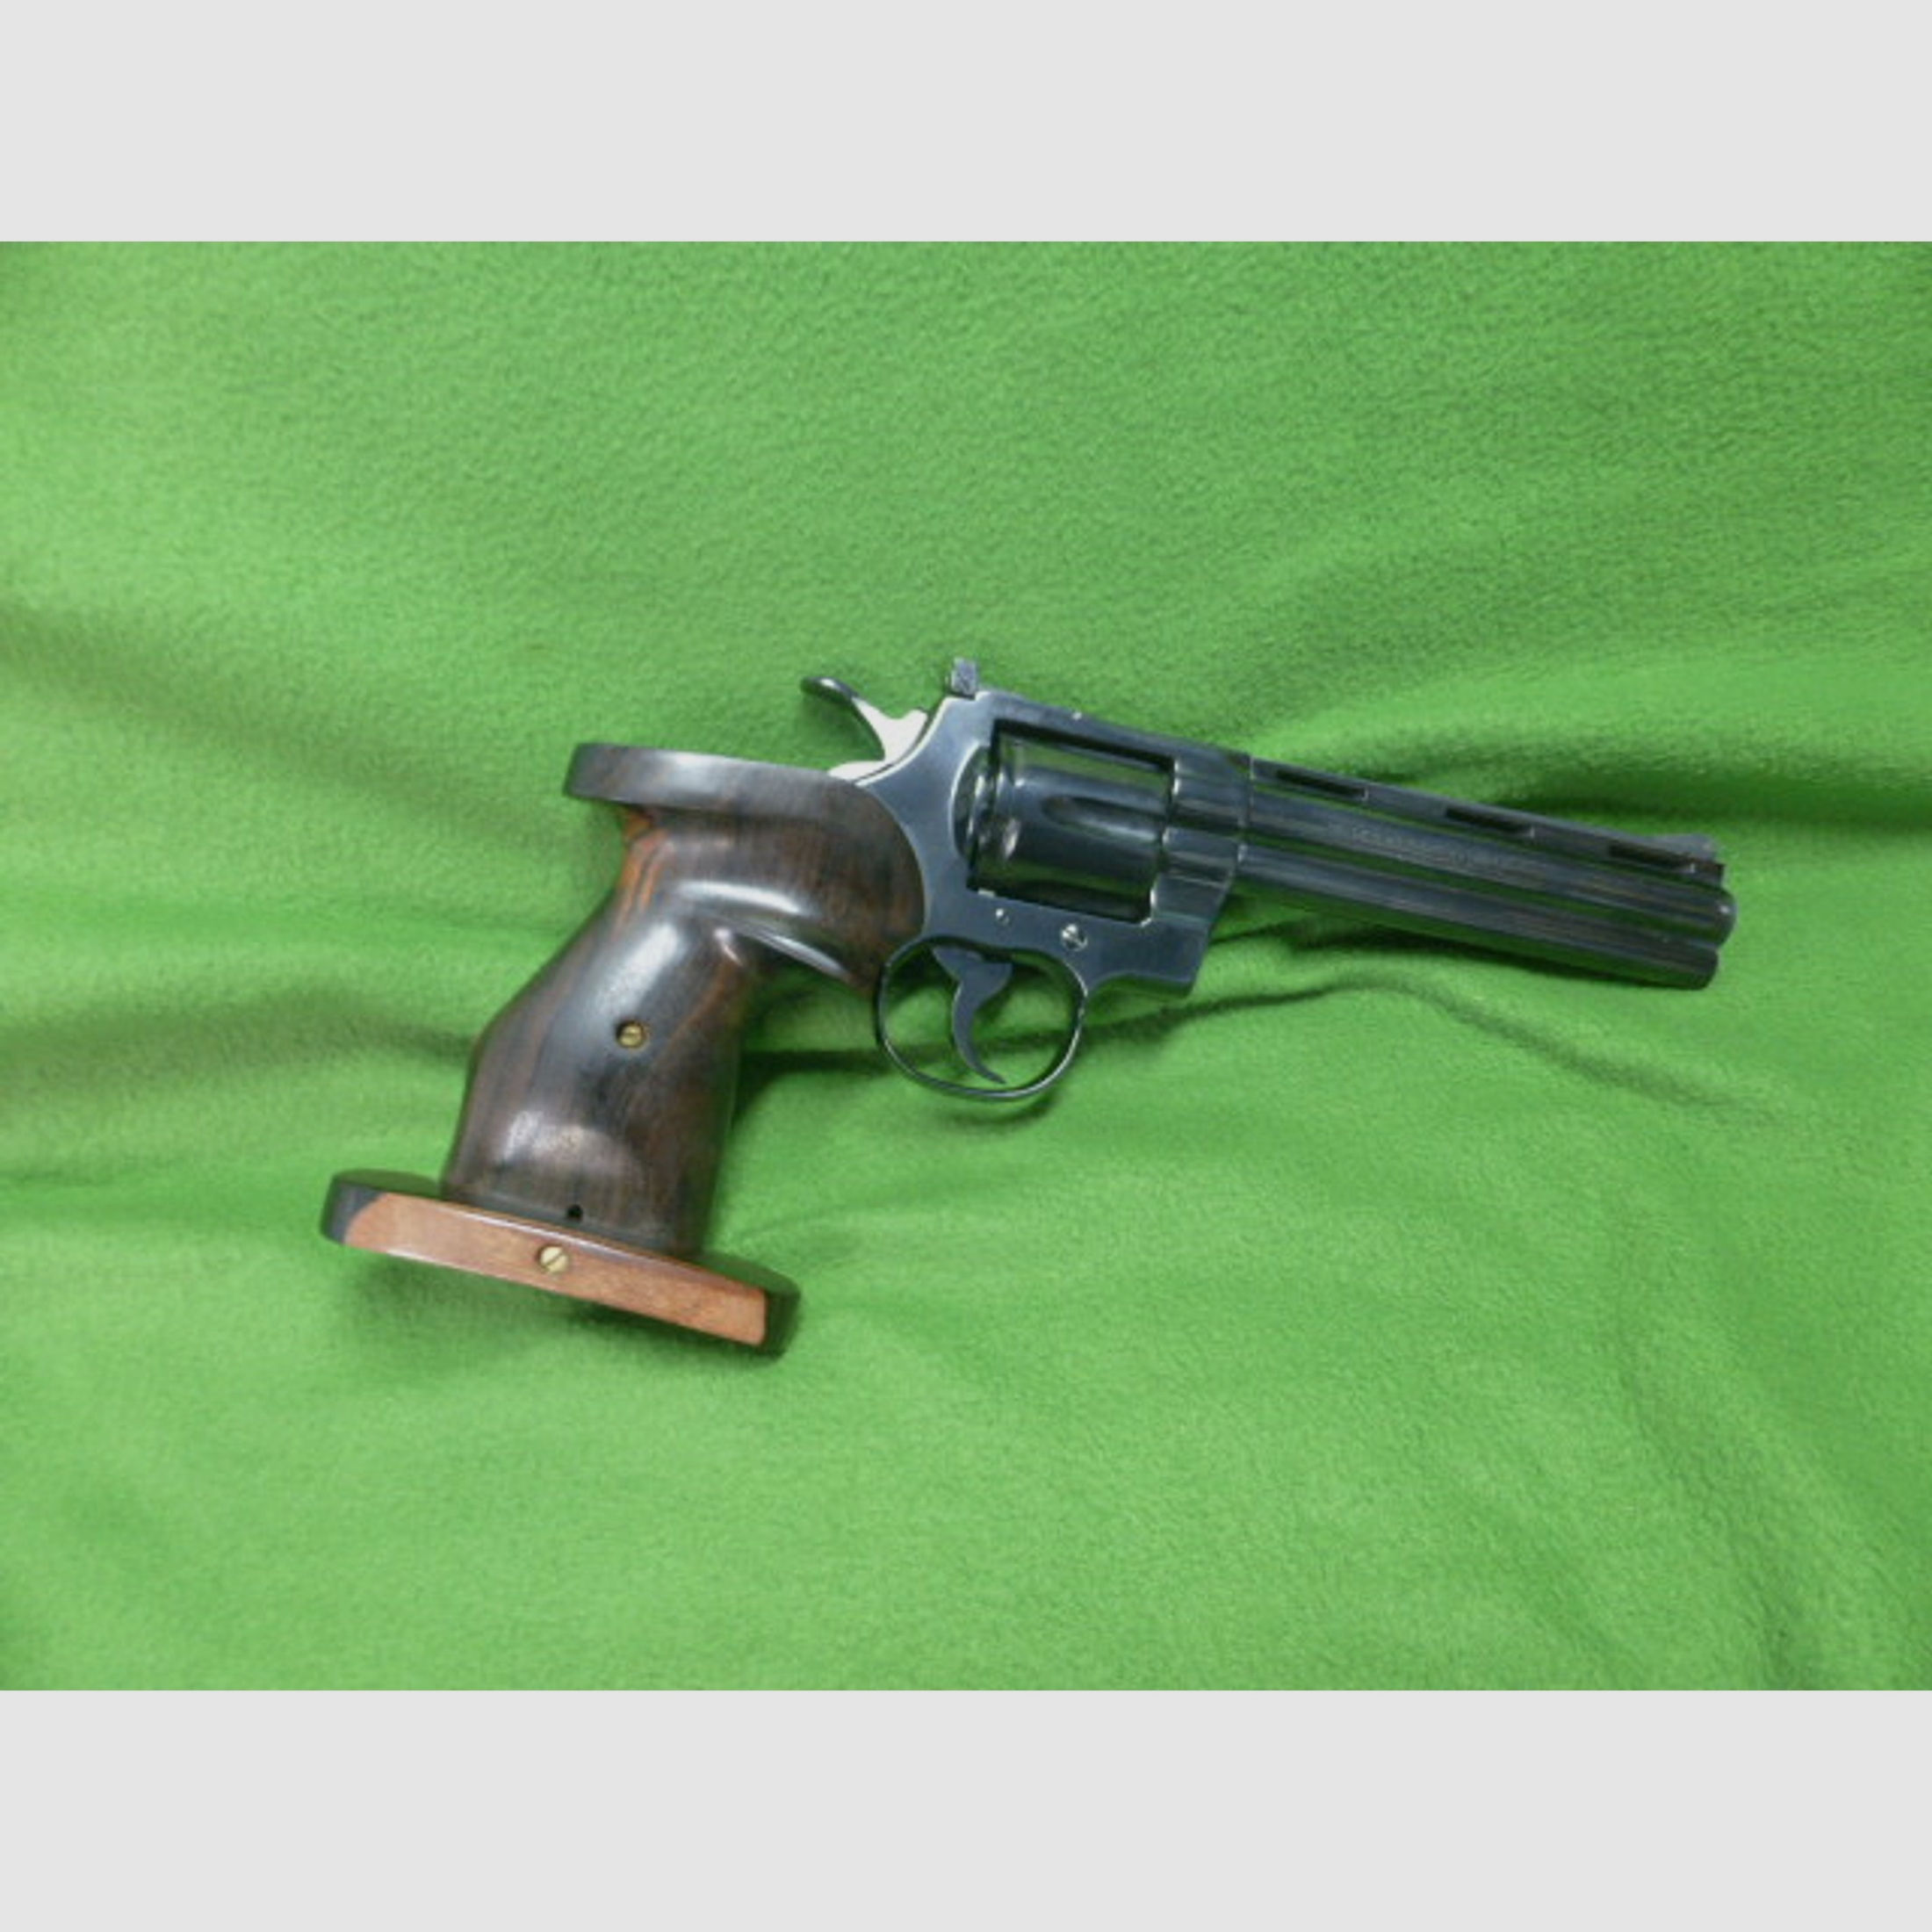 Revolver Hersteller Colt Modell Python Kaliber .357 Magnum